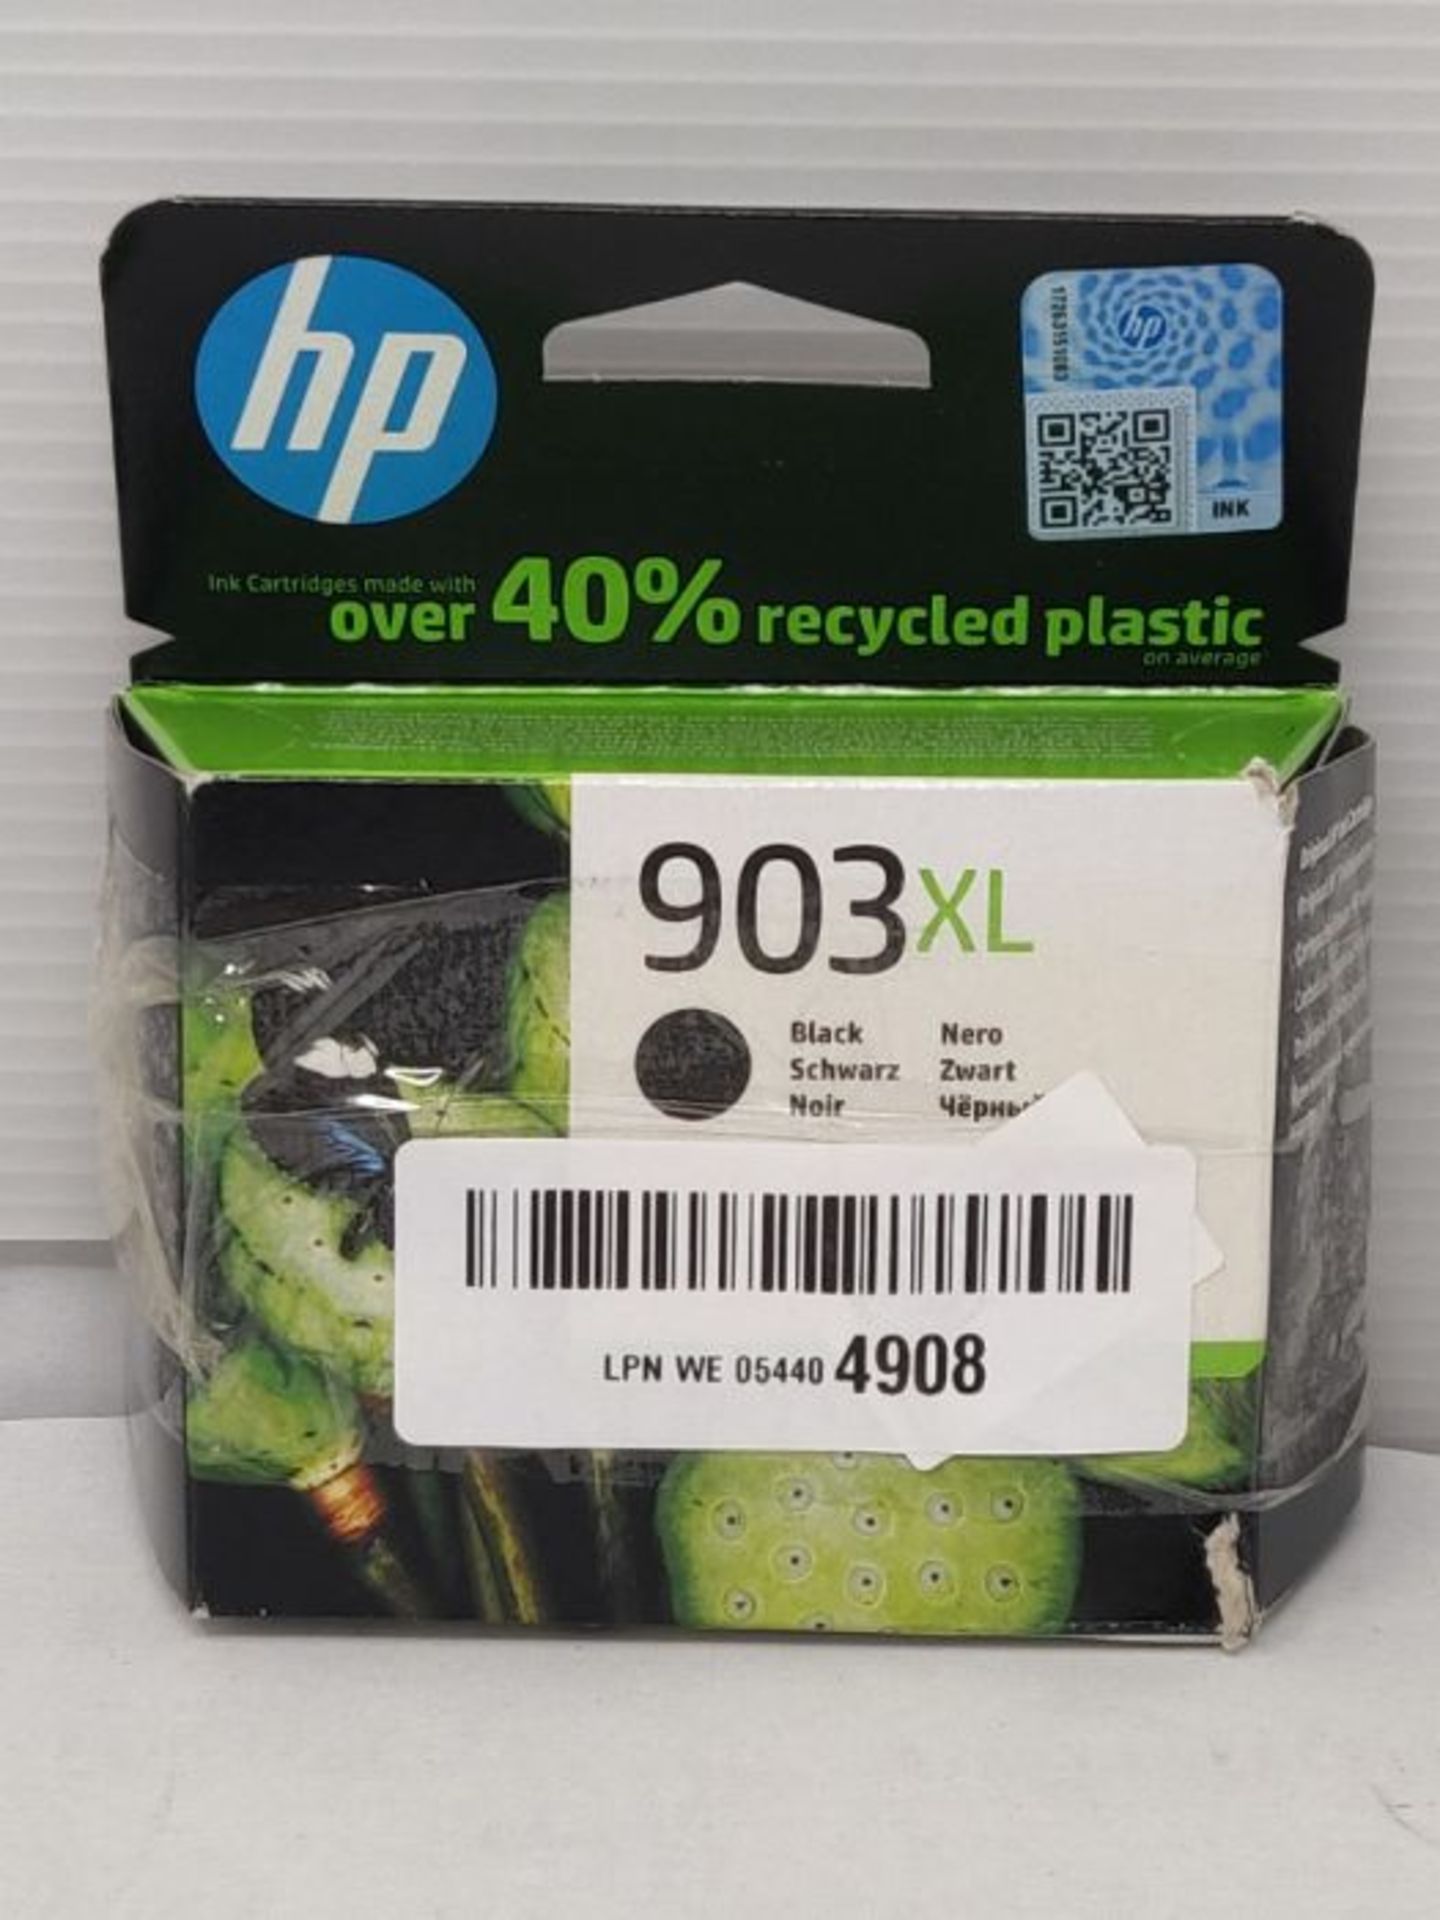 HP T6M15AE 903XL High Yield Original Ink Cartridge, Black, Single Pack - Image 2 of 3